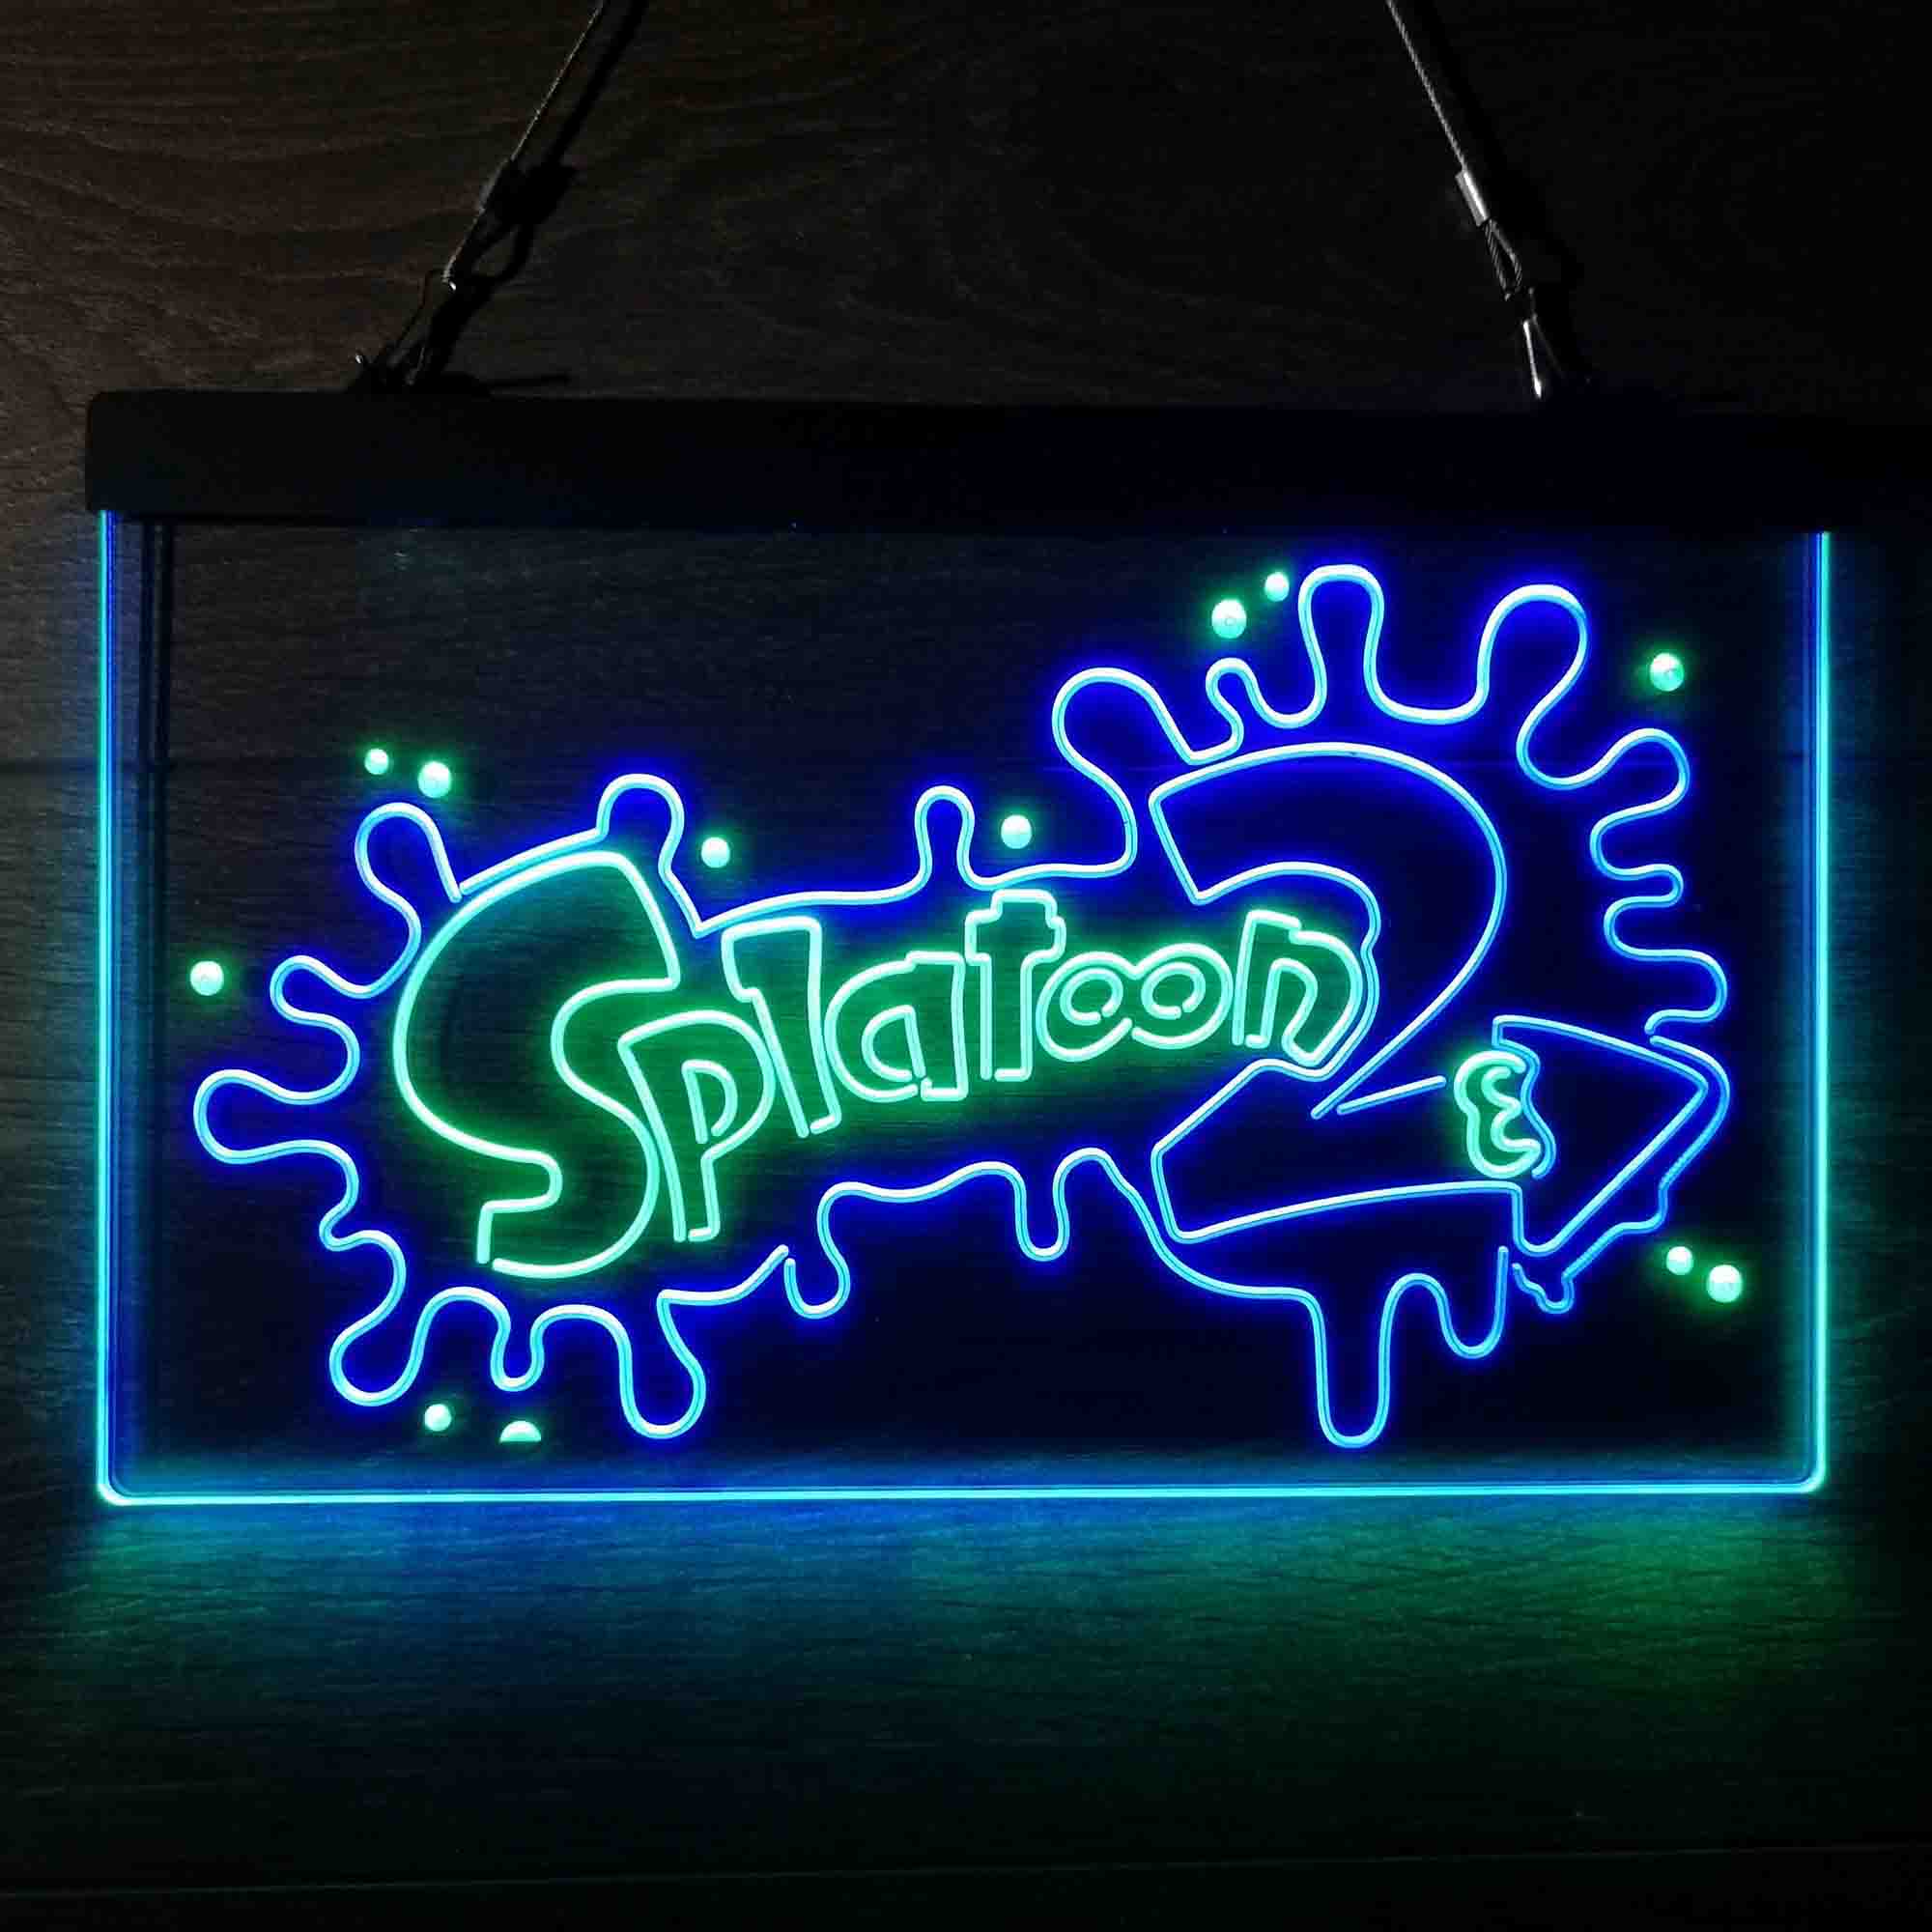 Splatoon 2 Neon LED Sign